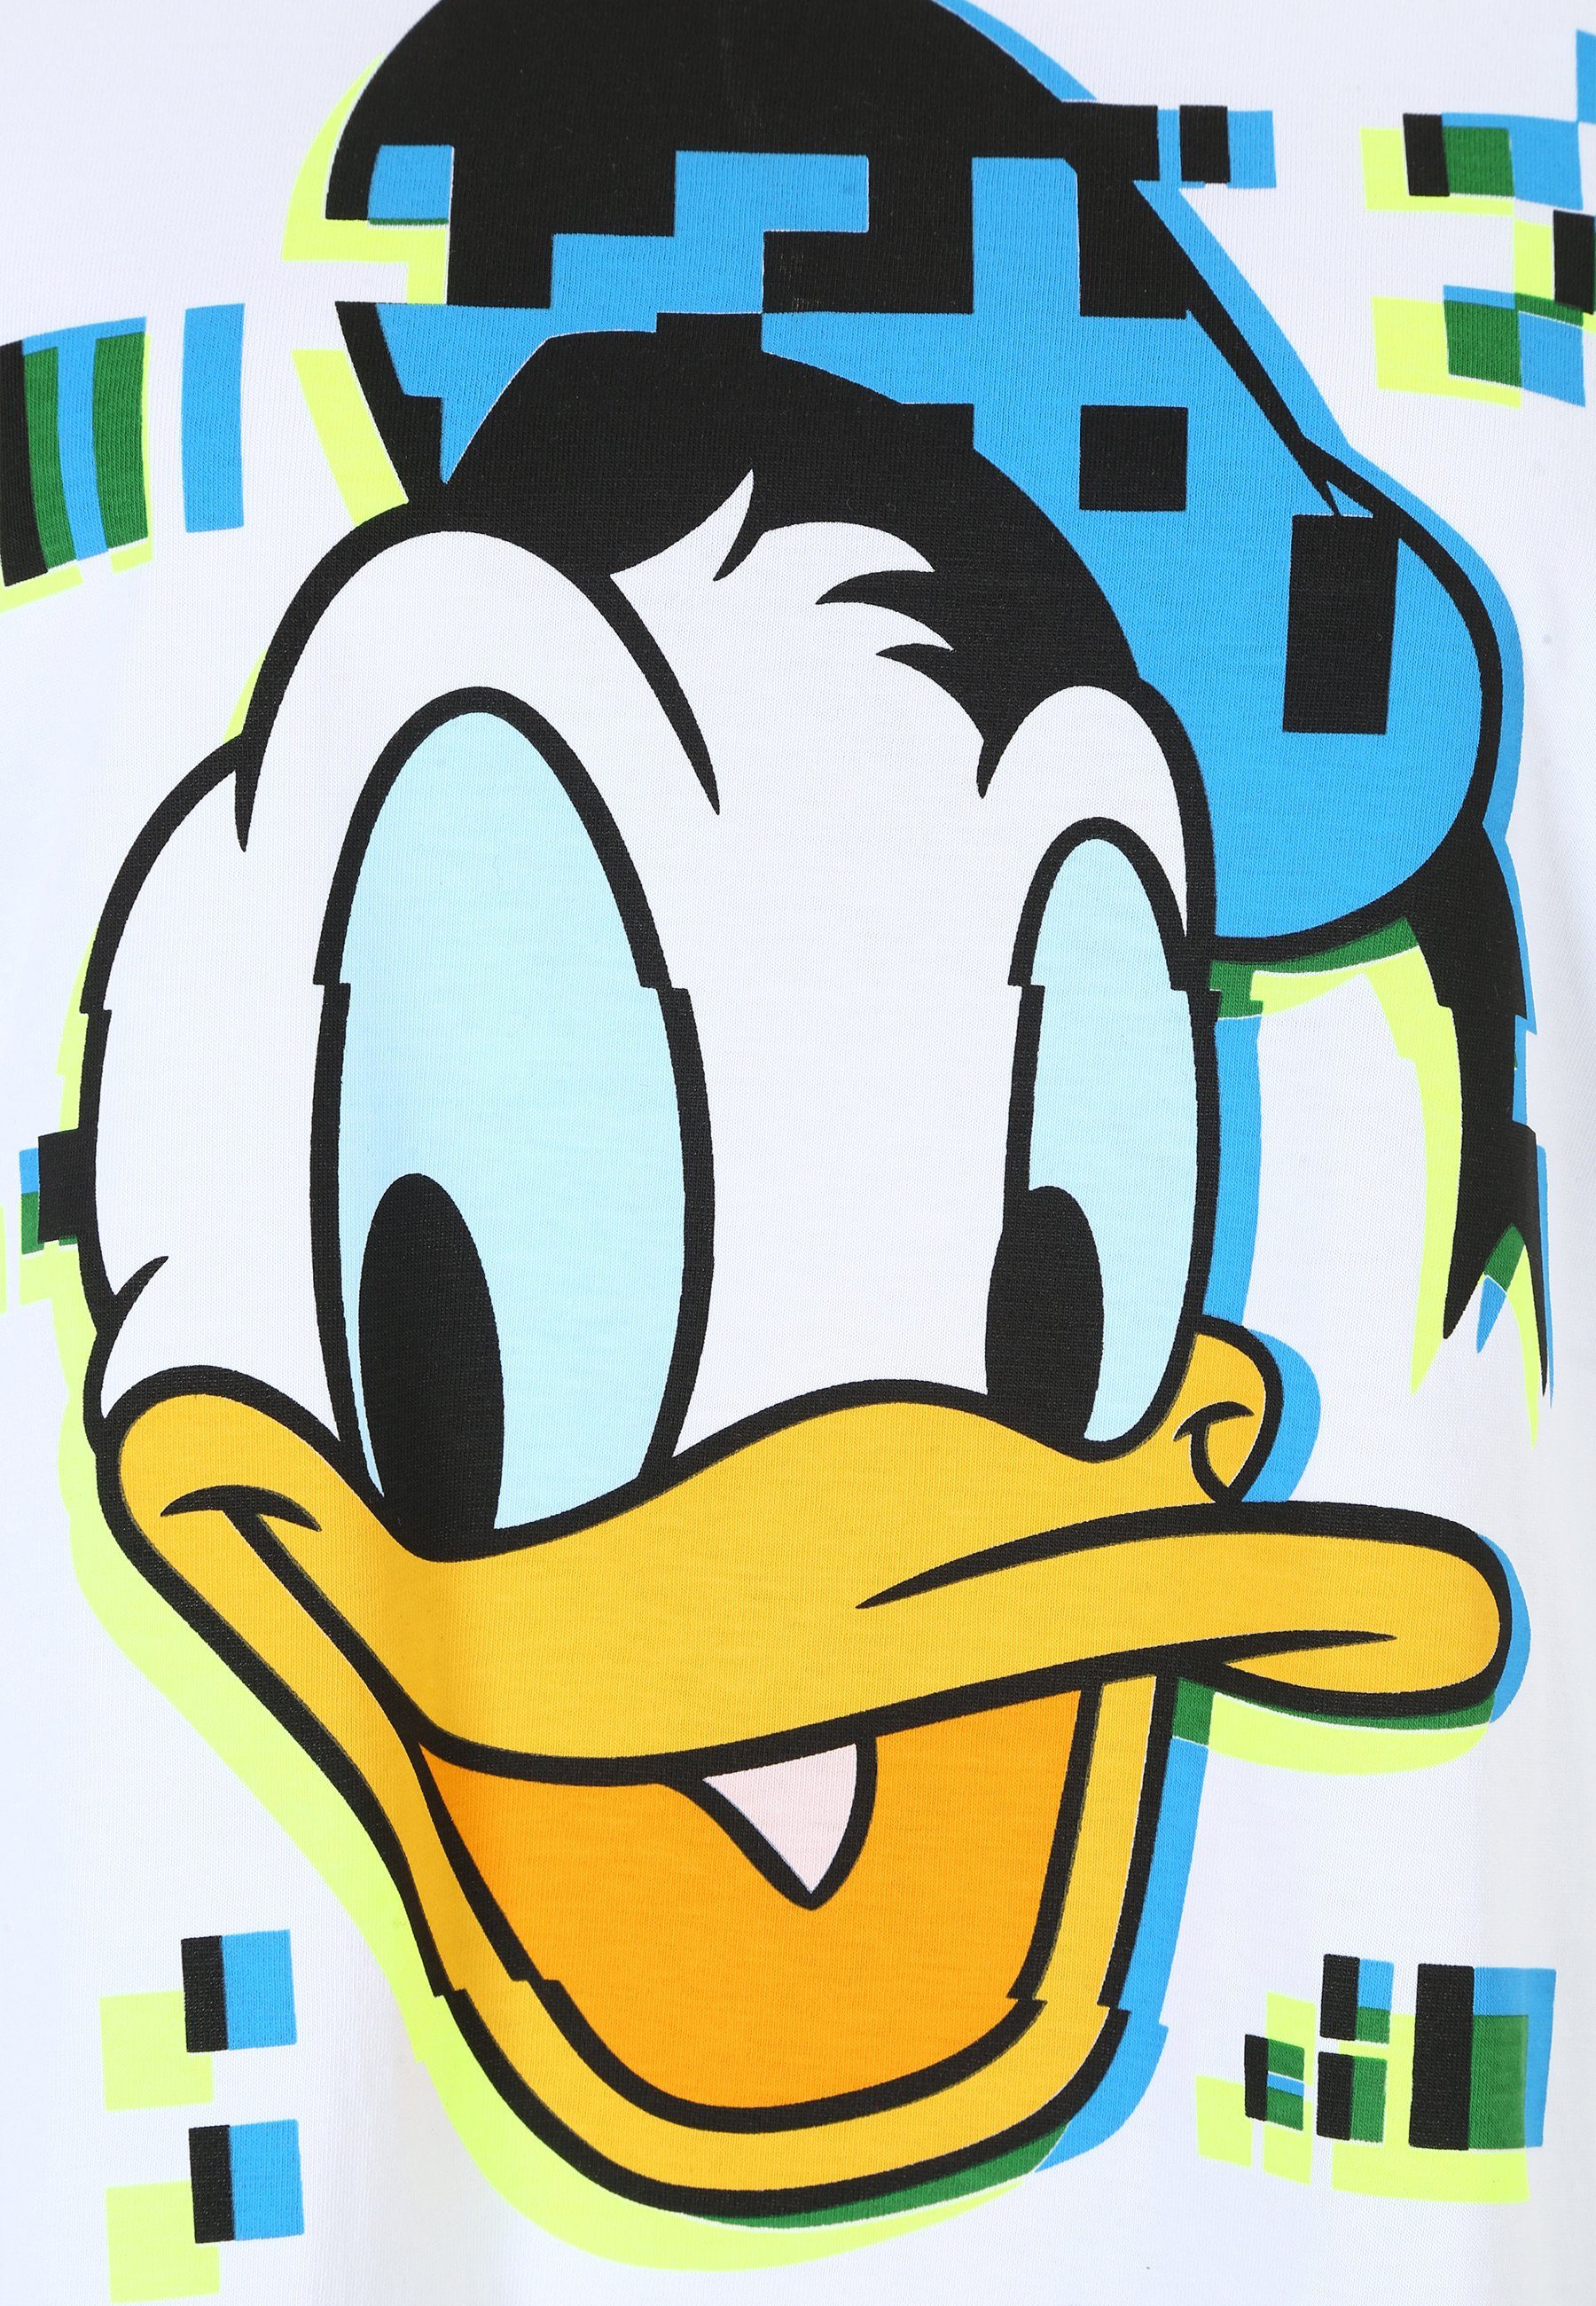 Princess modernem mit Design Hollywood goes T-Shirt Donald Duck